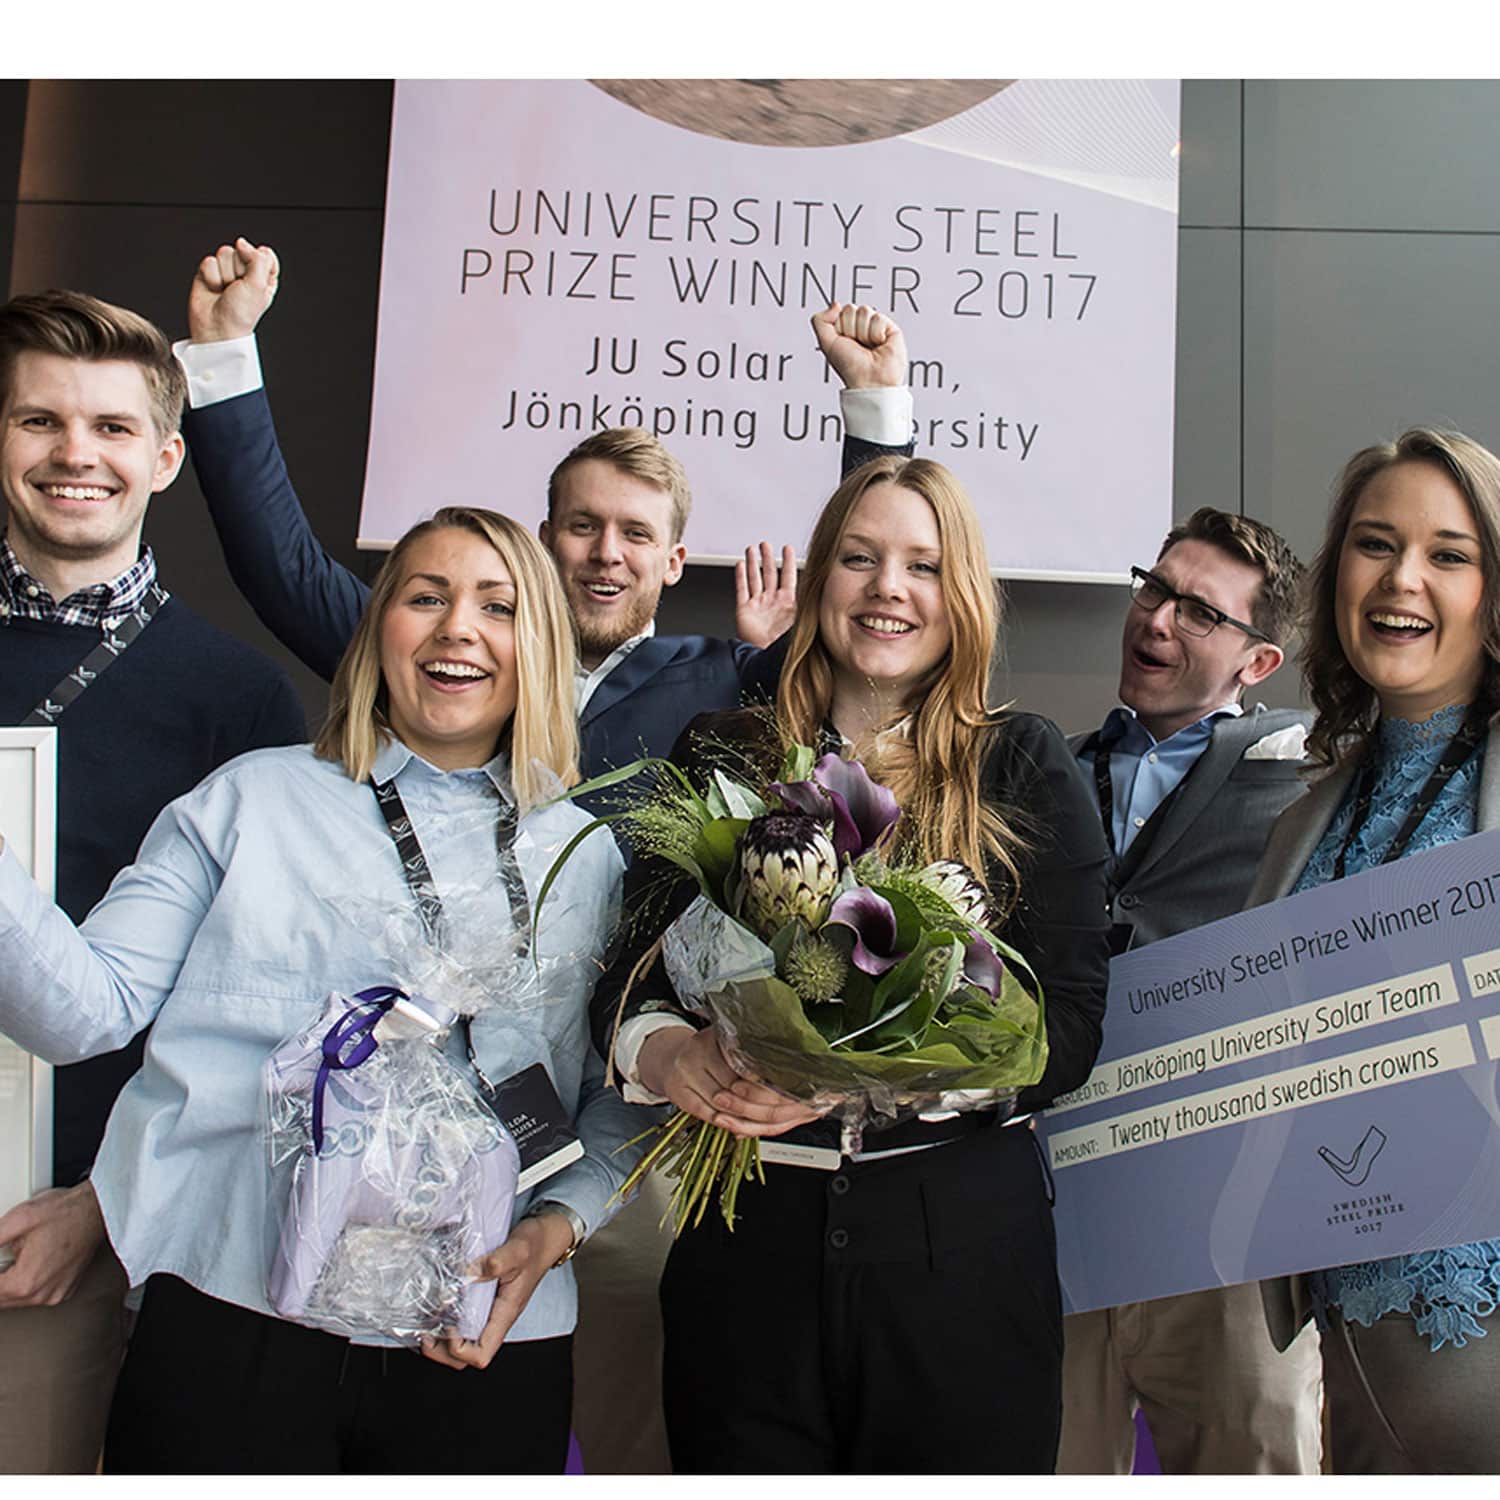 JU Solar Team winner of the University Steel Prize